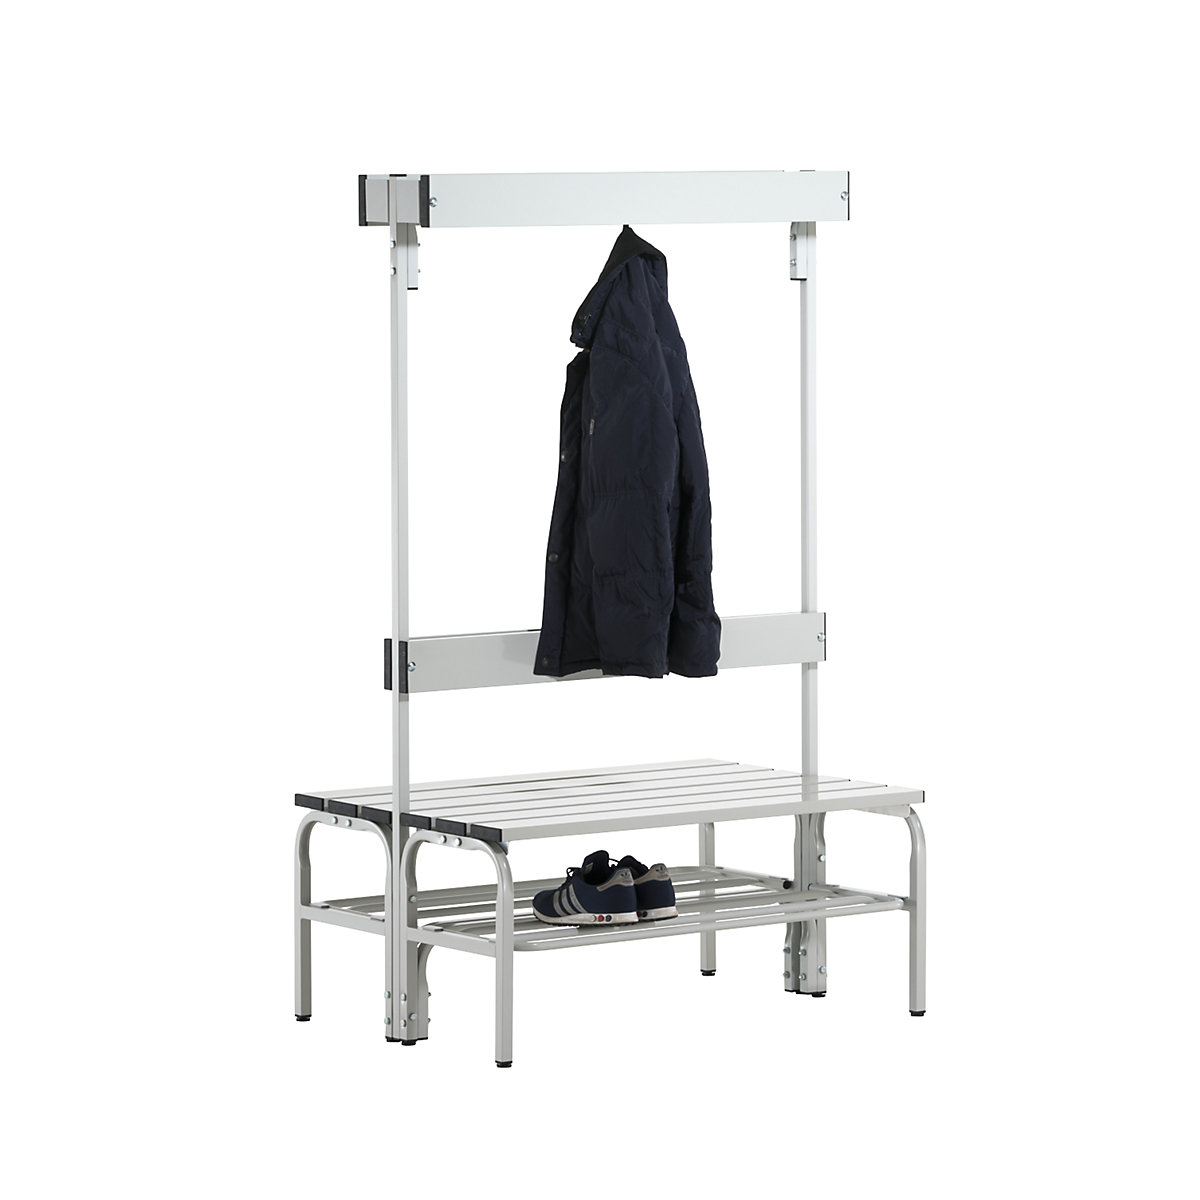 Sypro – Changing room bench with aluminium slats (Product illustration 8)